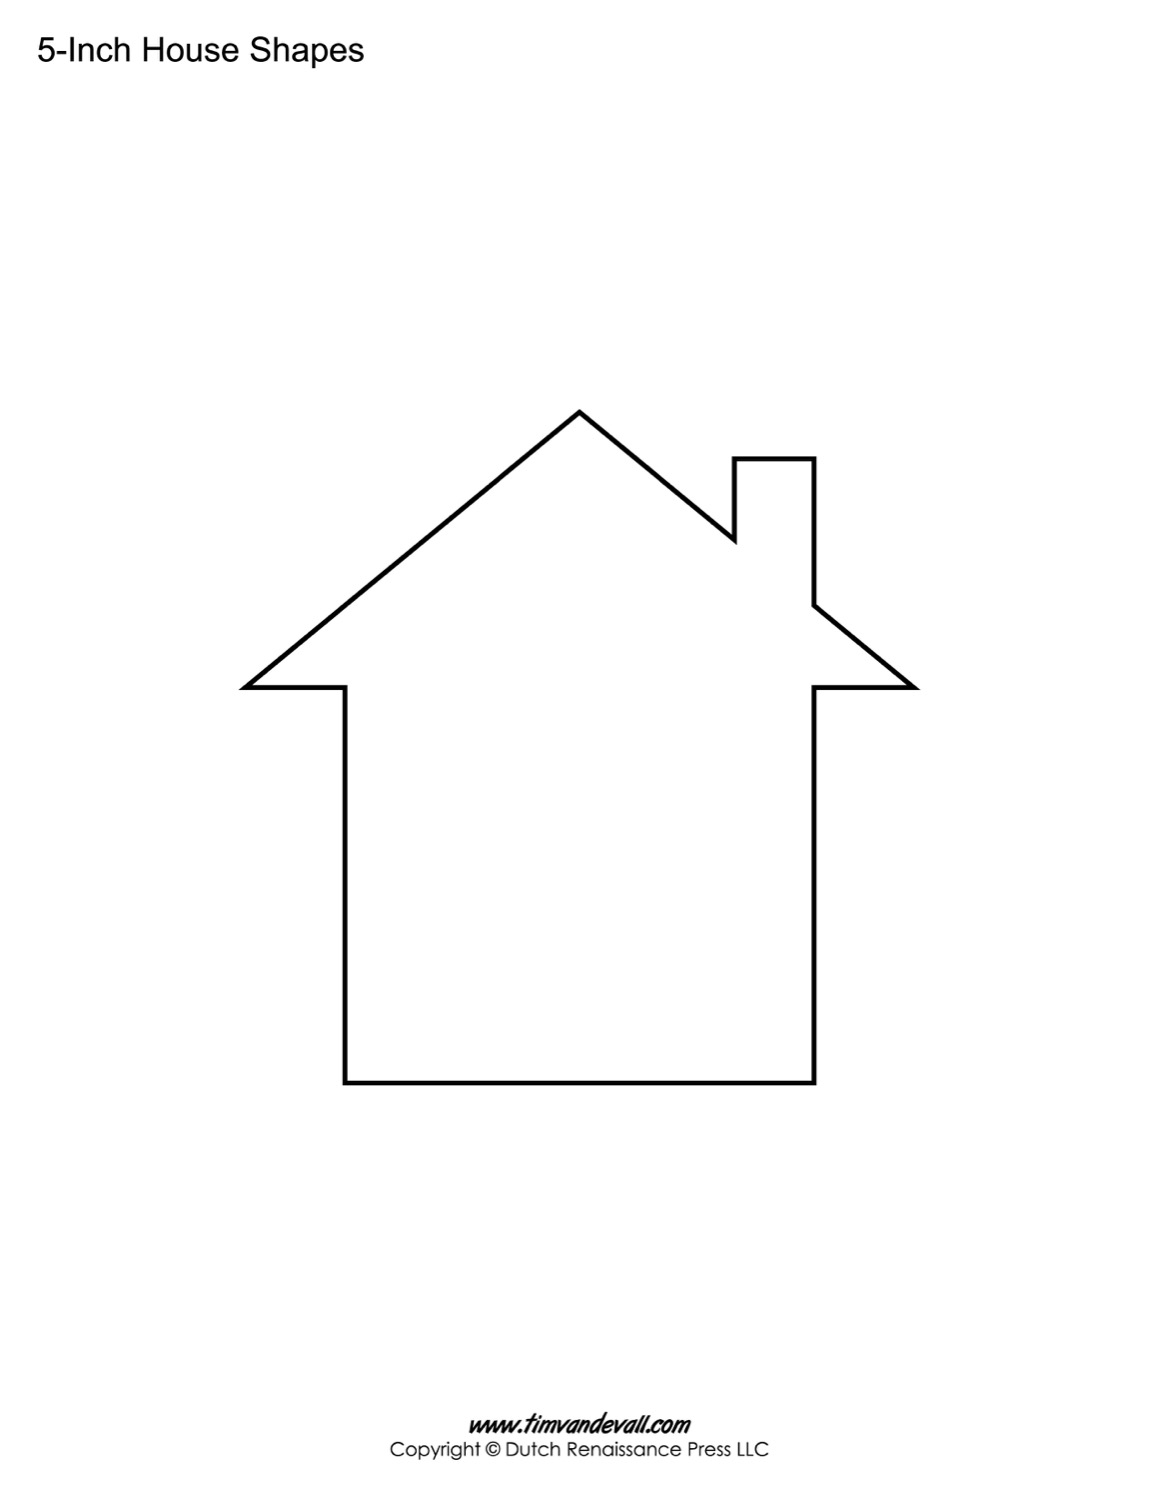 blank house template